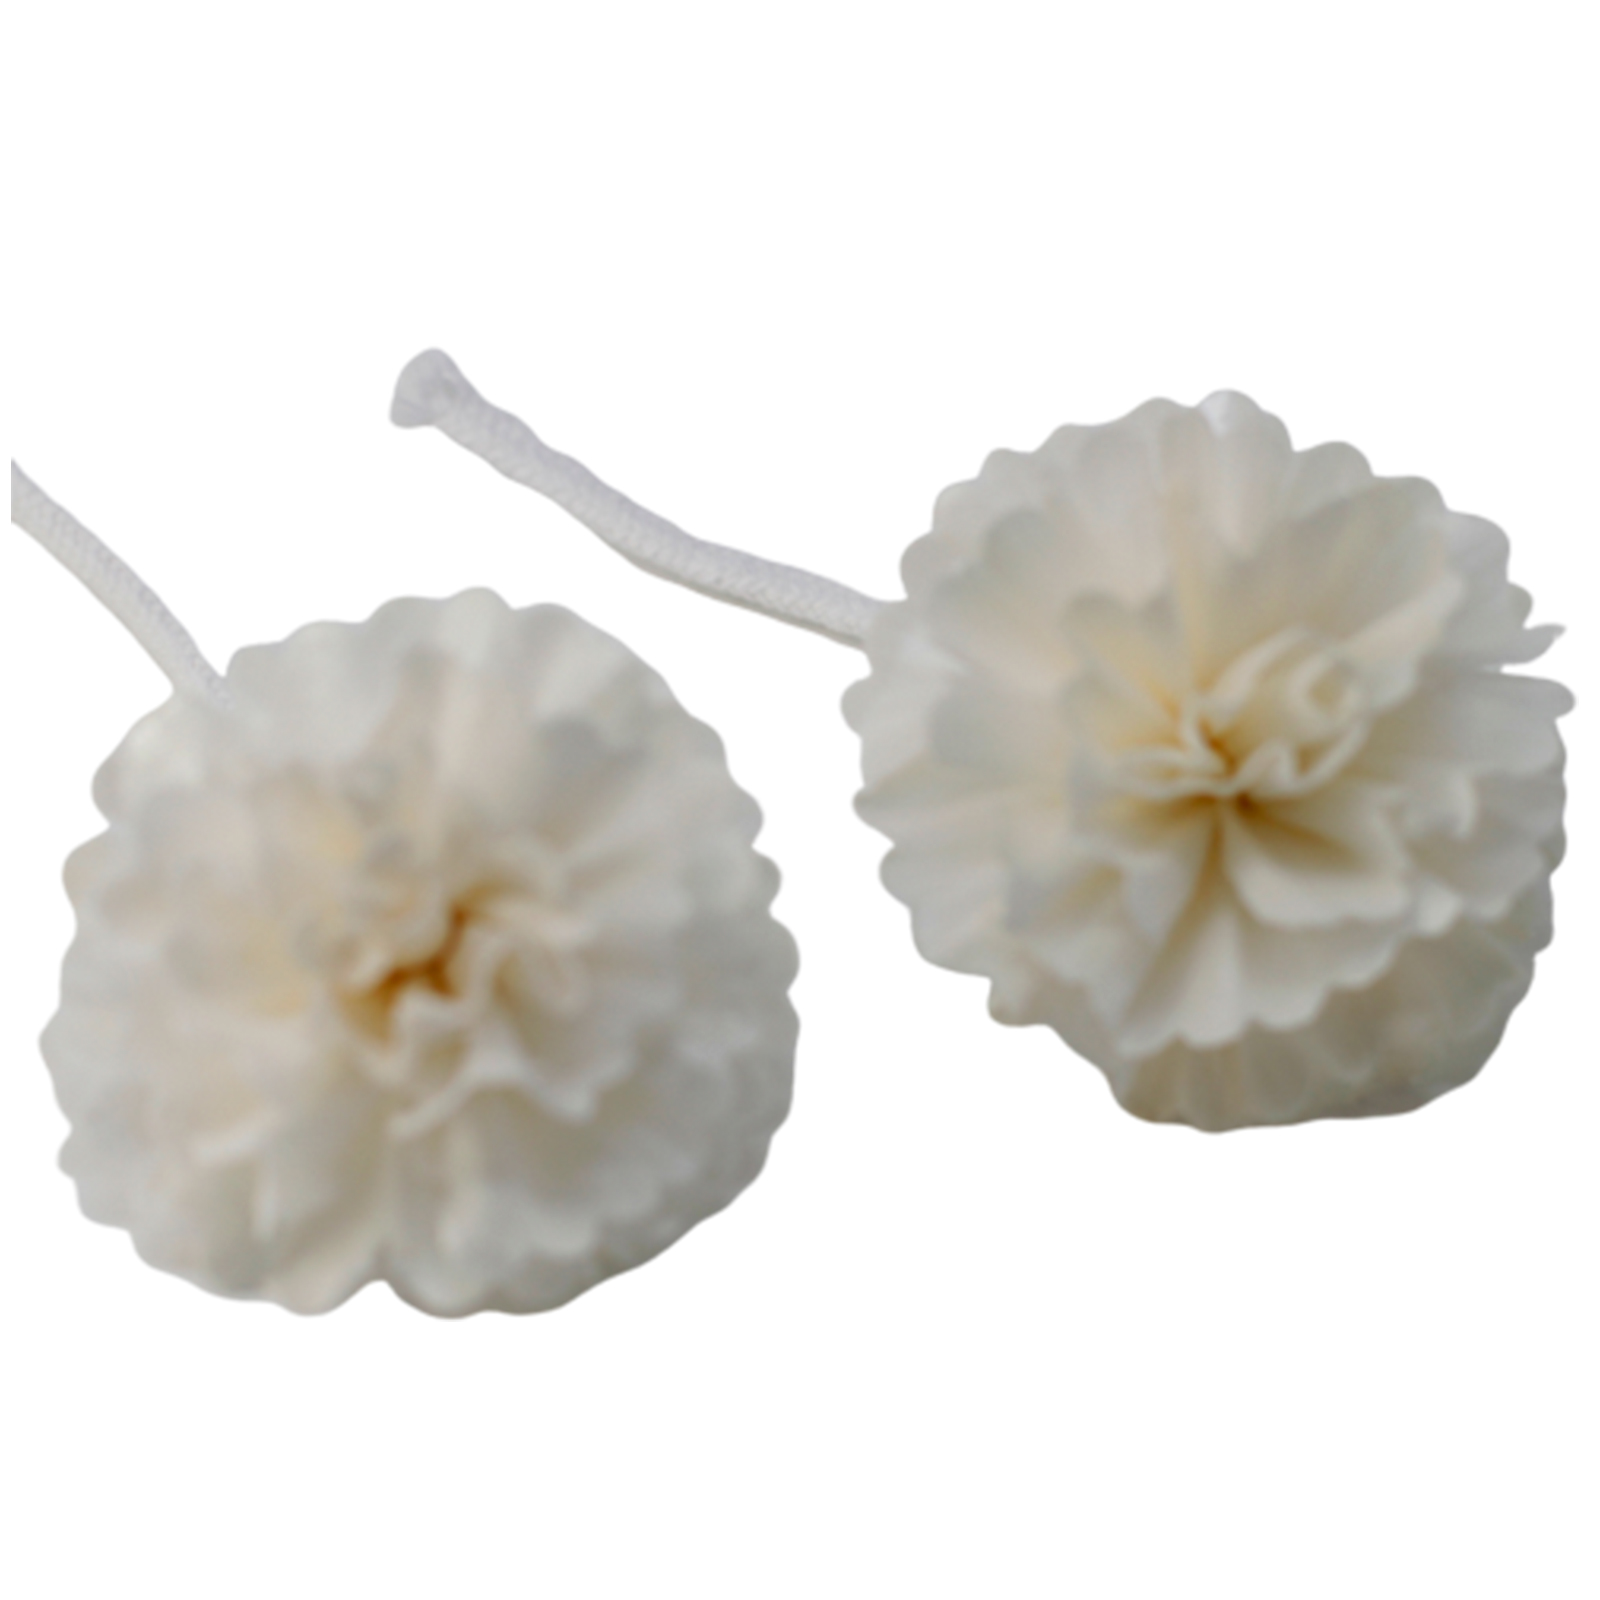 12 x Natural Diffuser Flowers - Medium Carnation on String